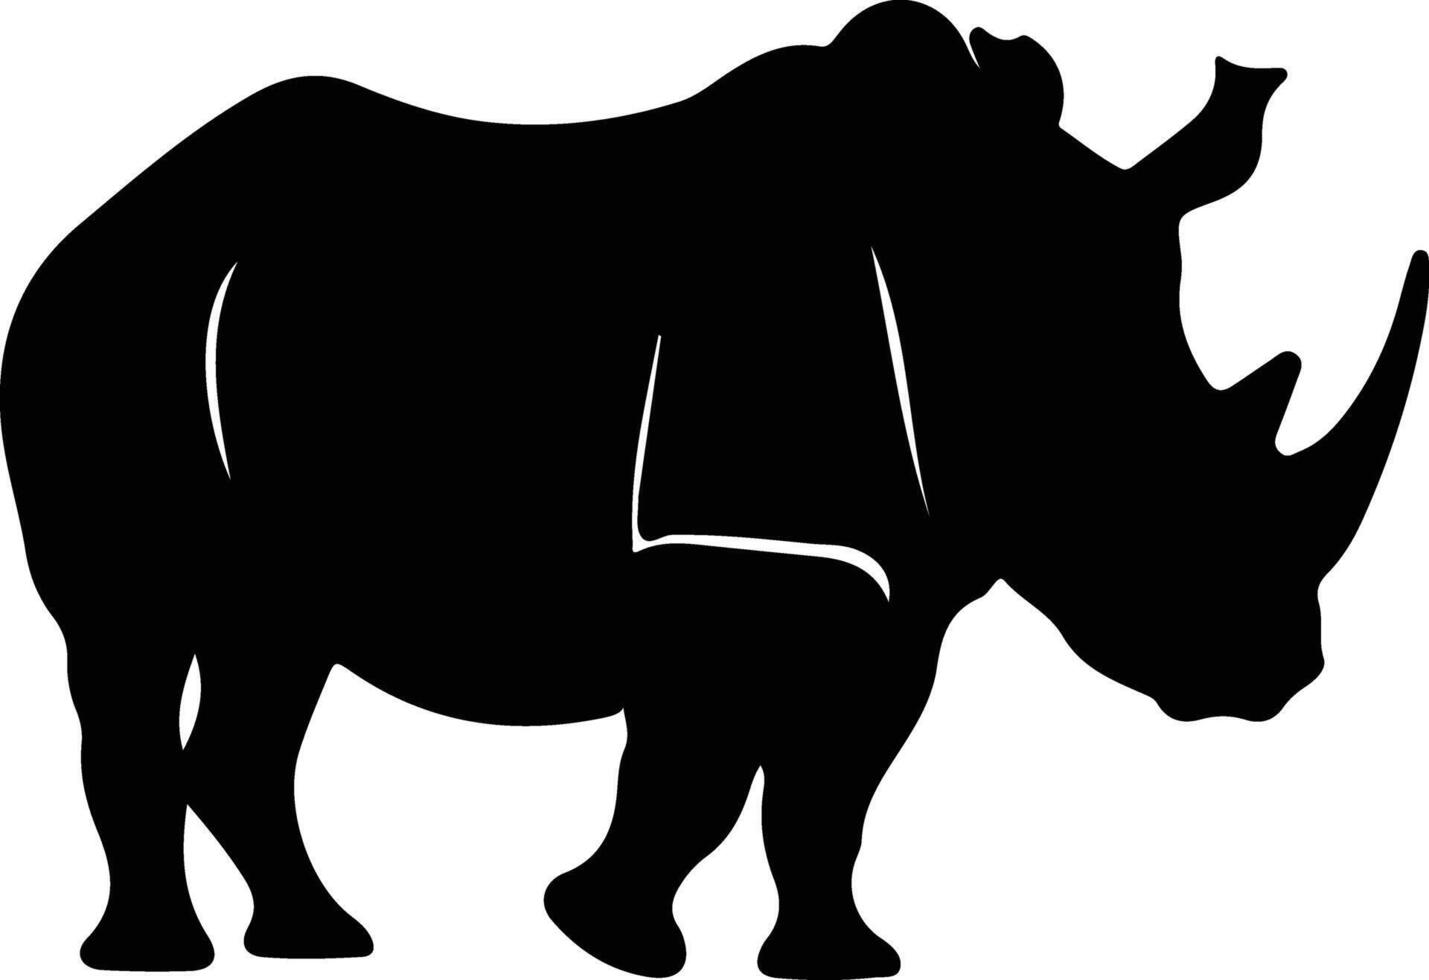 blanc rhinocéros noir silhouette vecteur